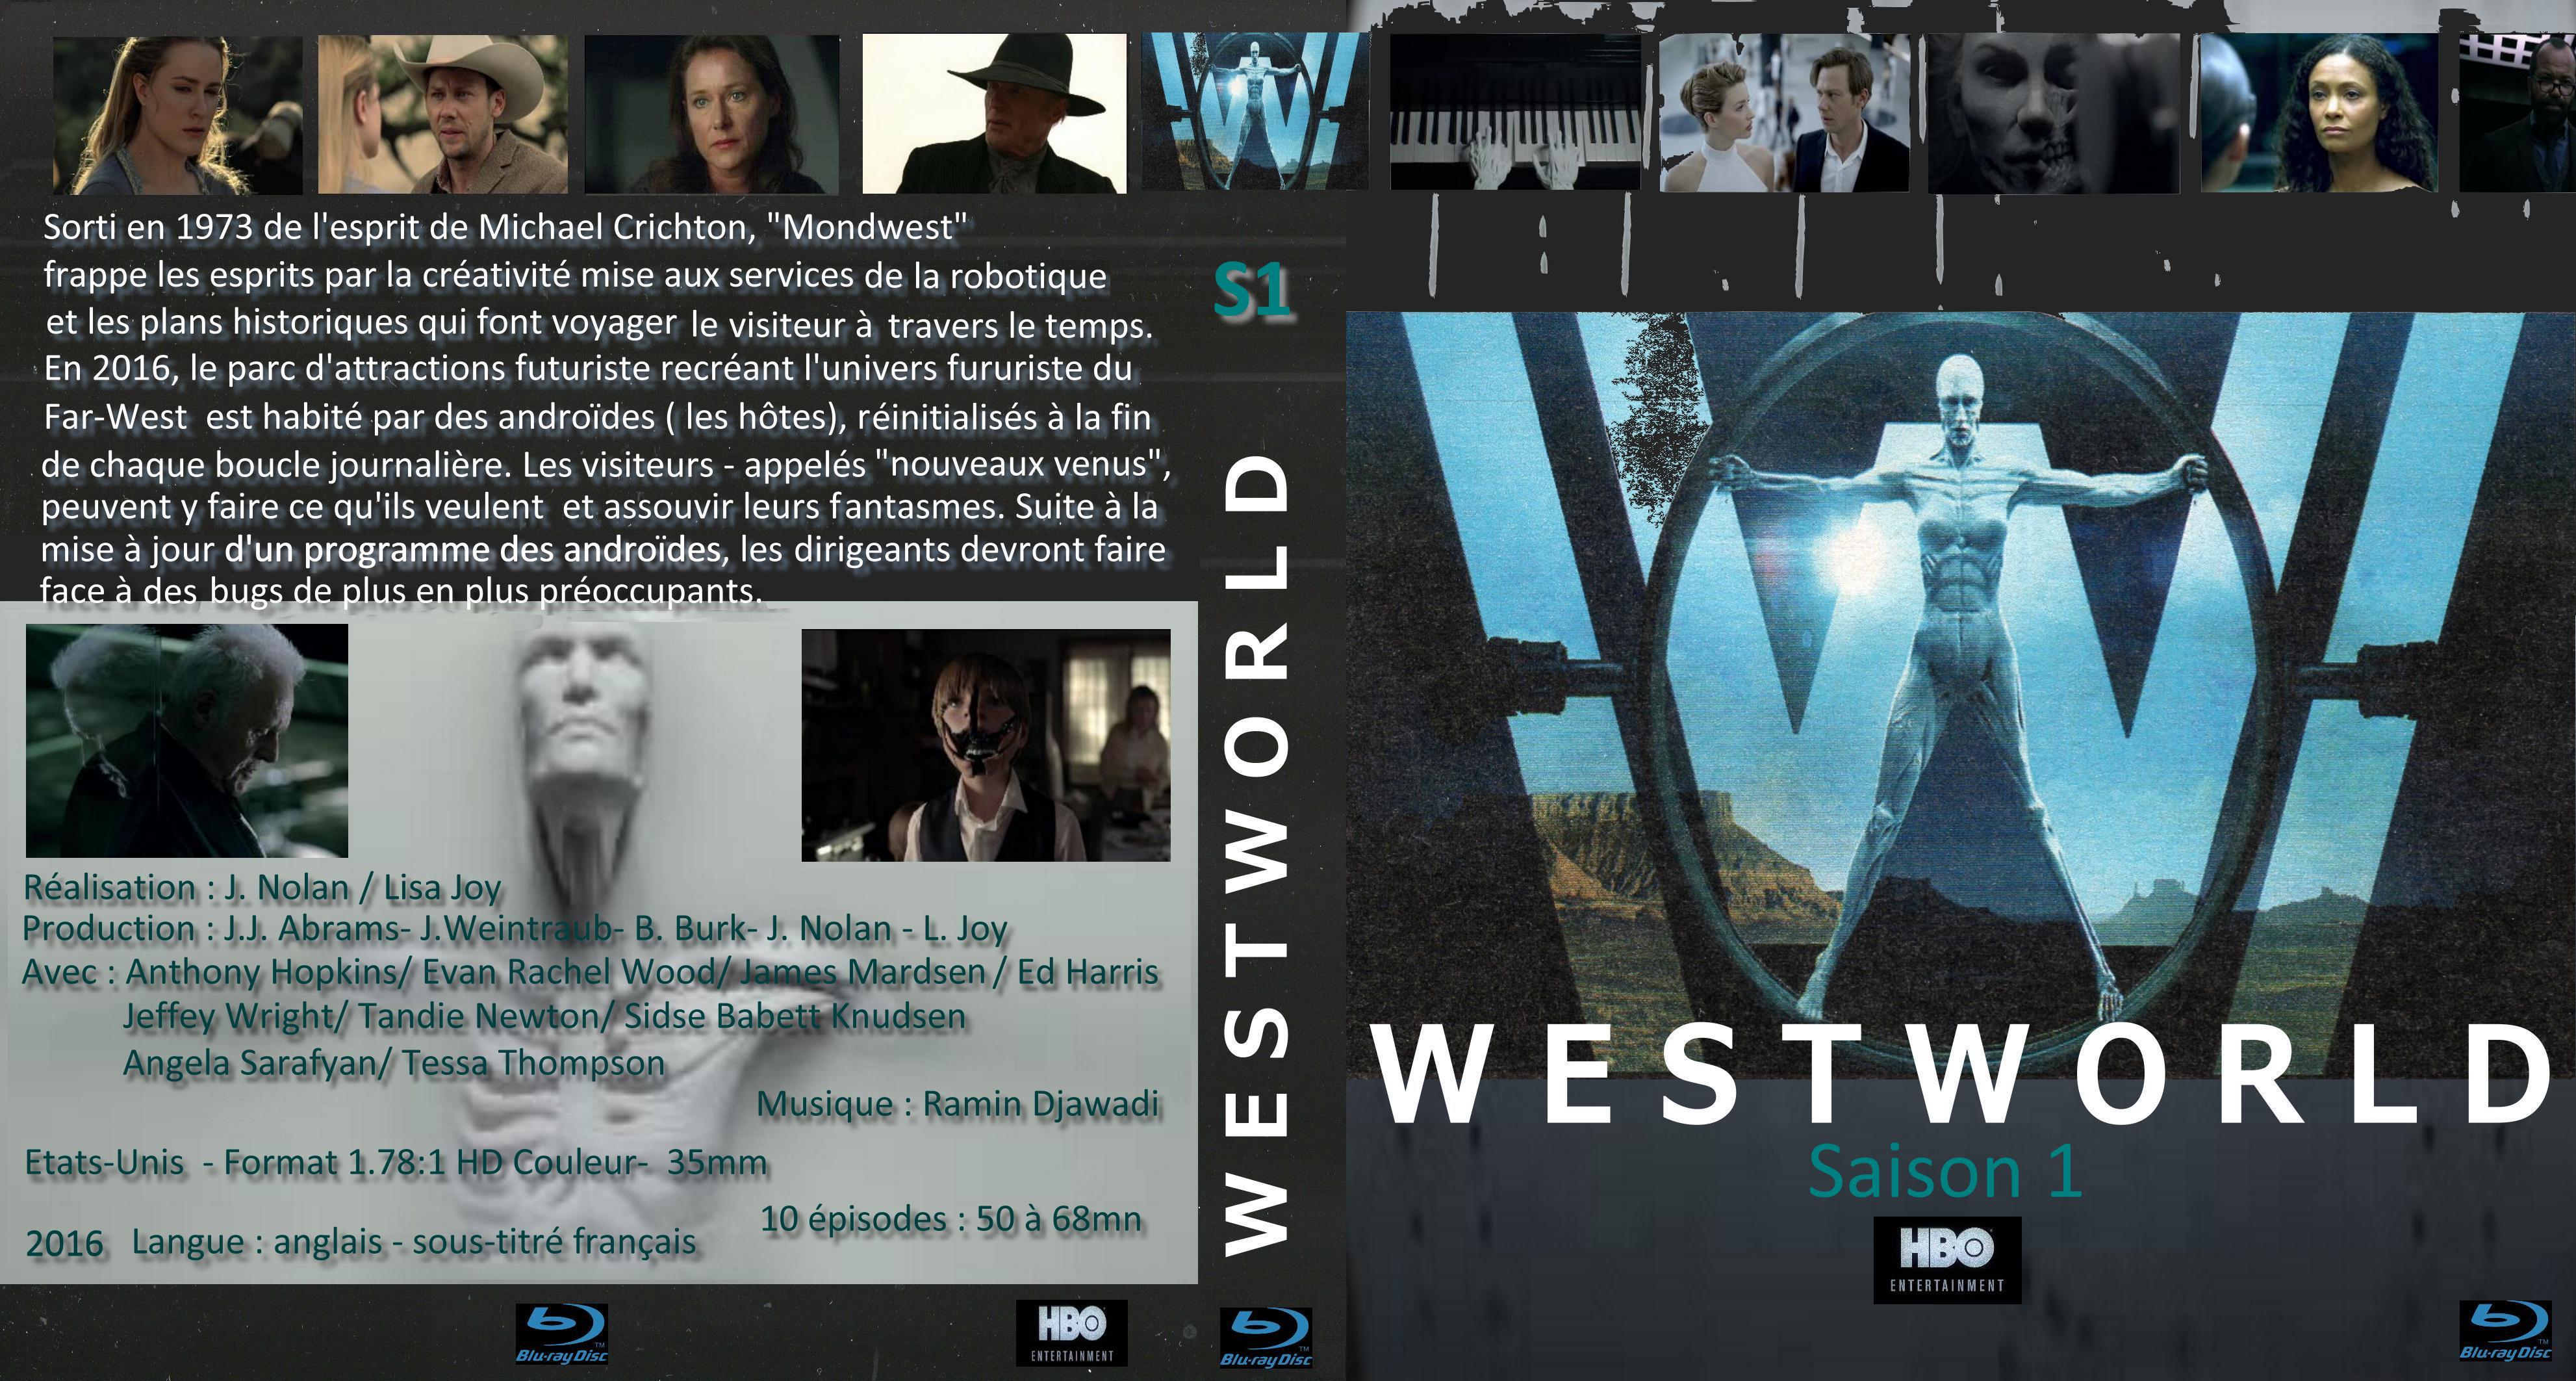 Jaquette DVD Westworld saison 1 custom (BLU-RAY)